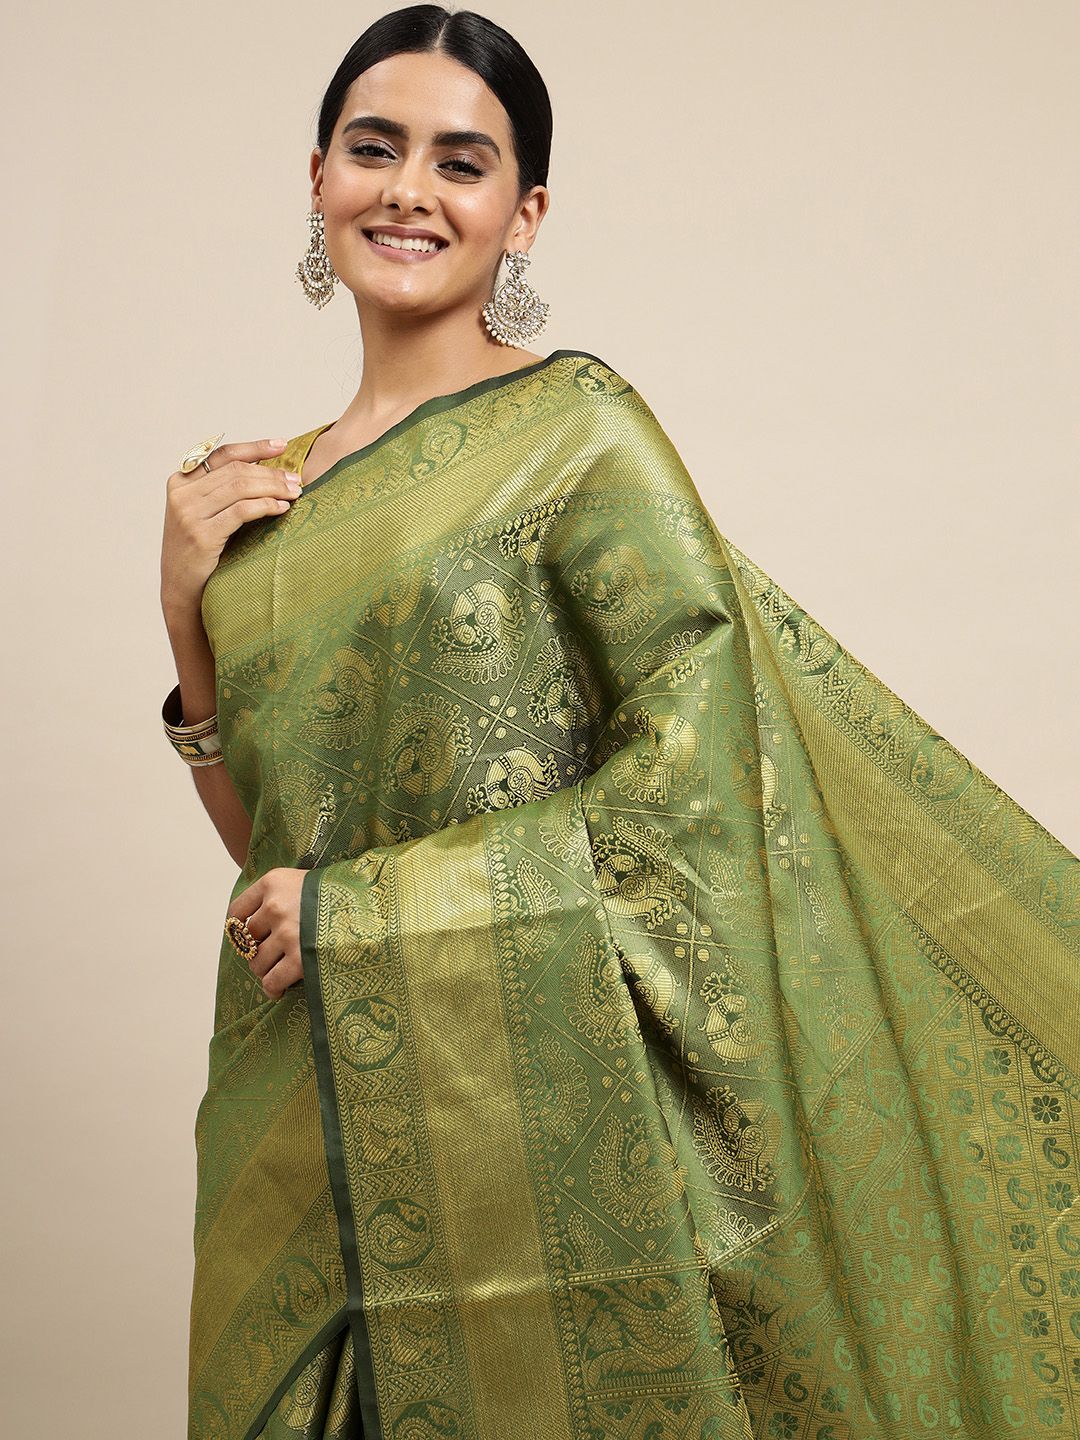 pista green Wedding sarees online